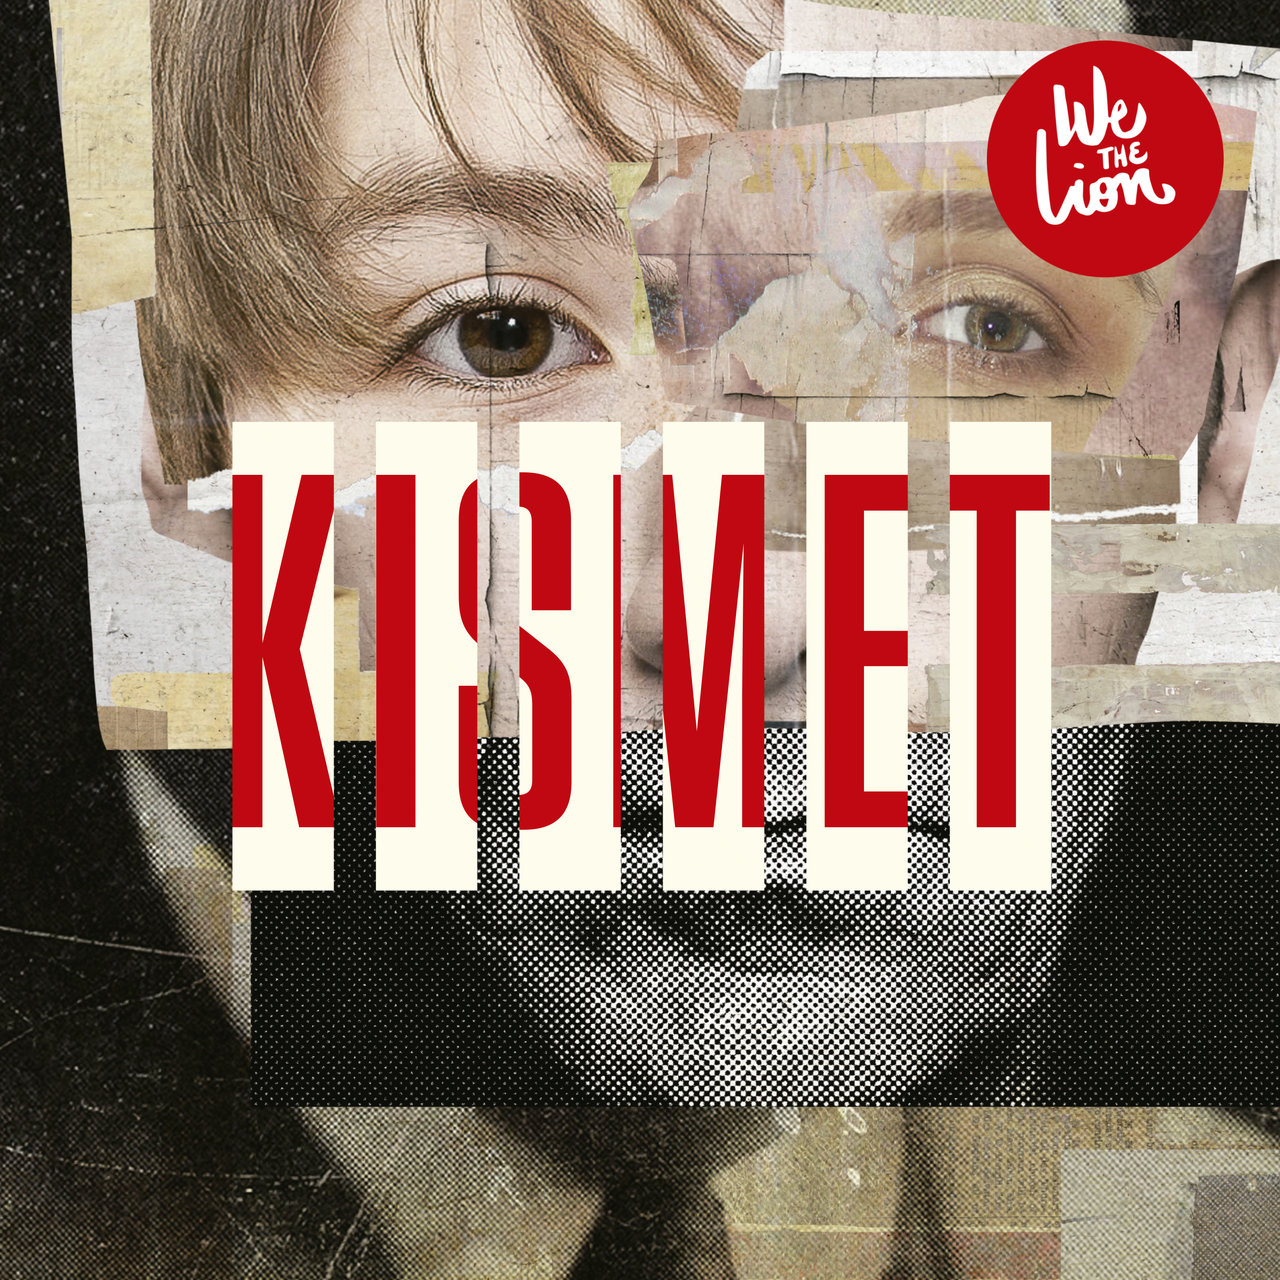 We The Lion Kismet cover artwork